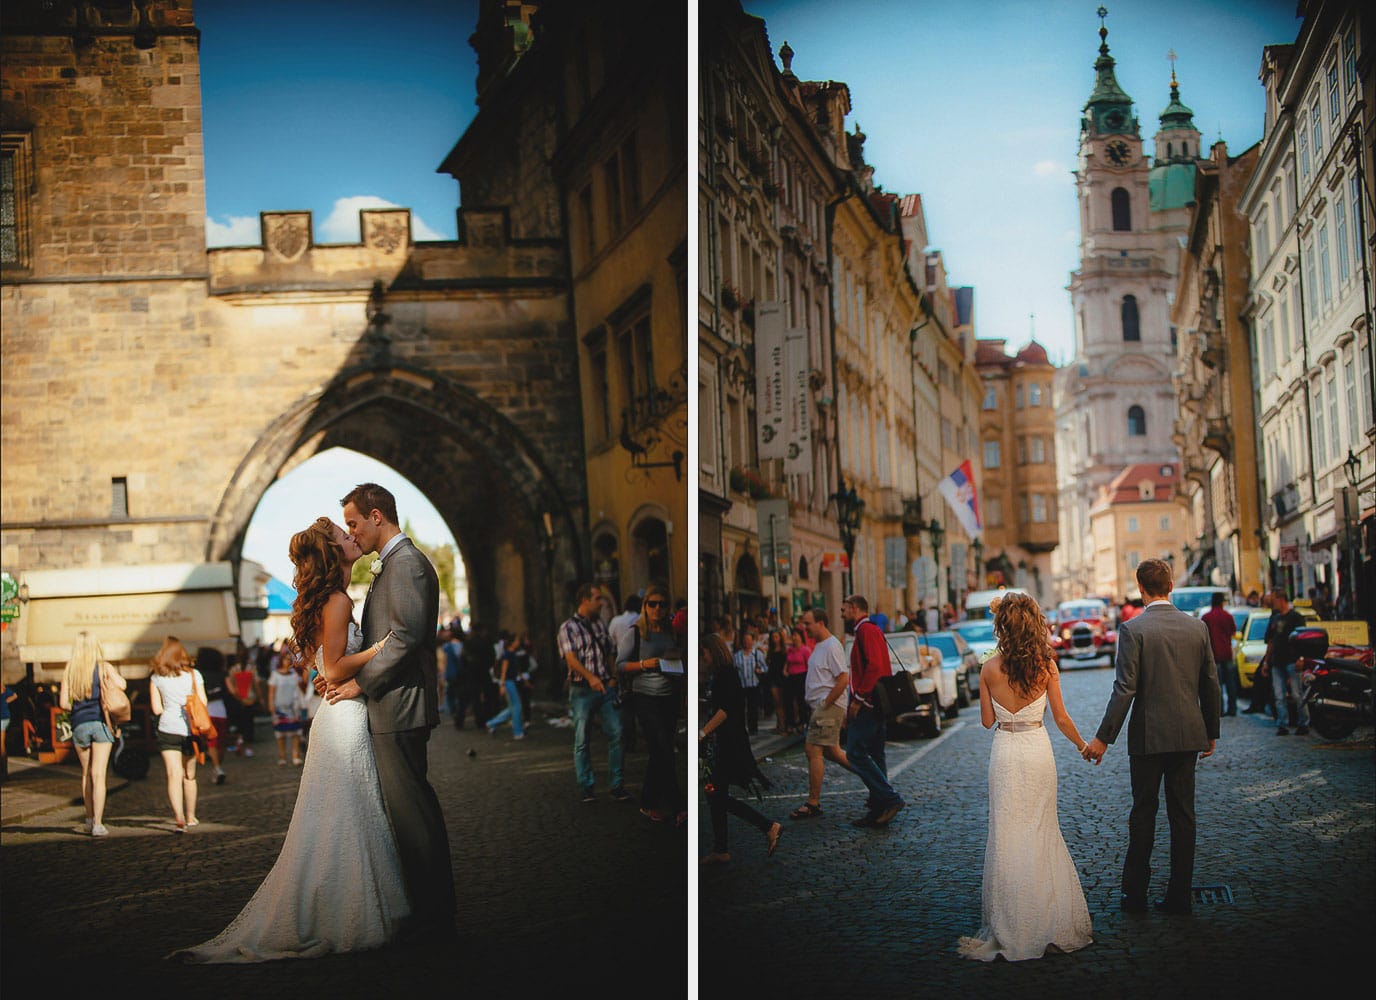 Prague wedding photographers / R&B wedding photographs at the Charles Bridge